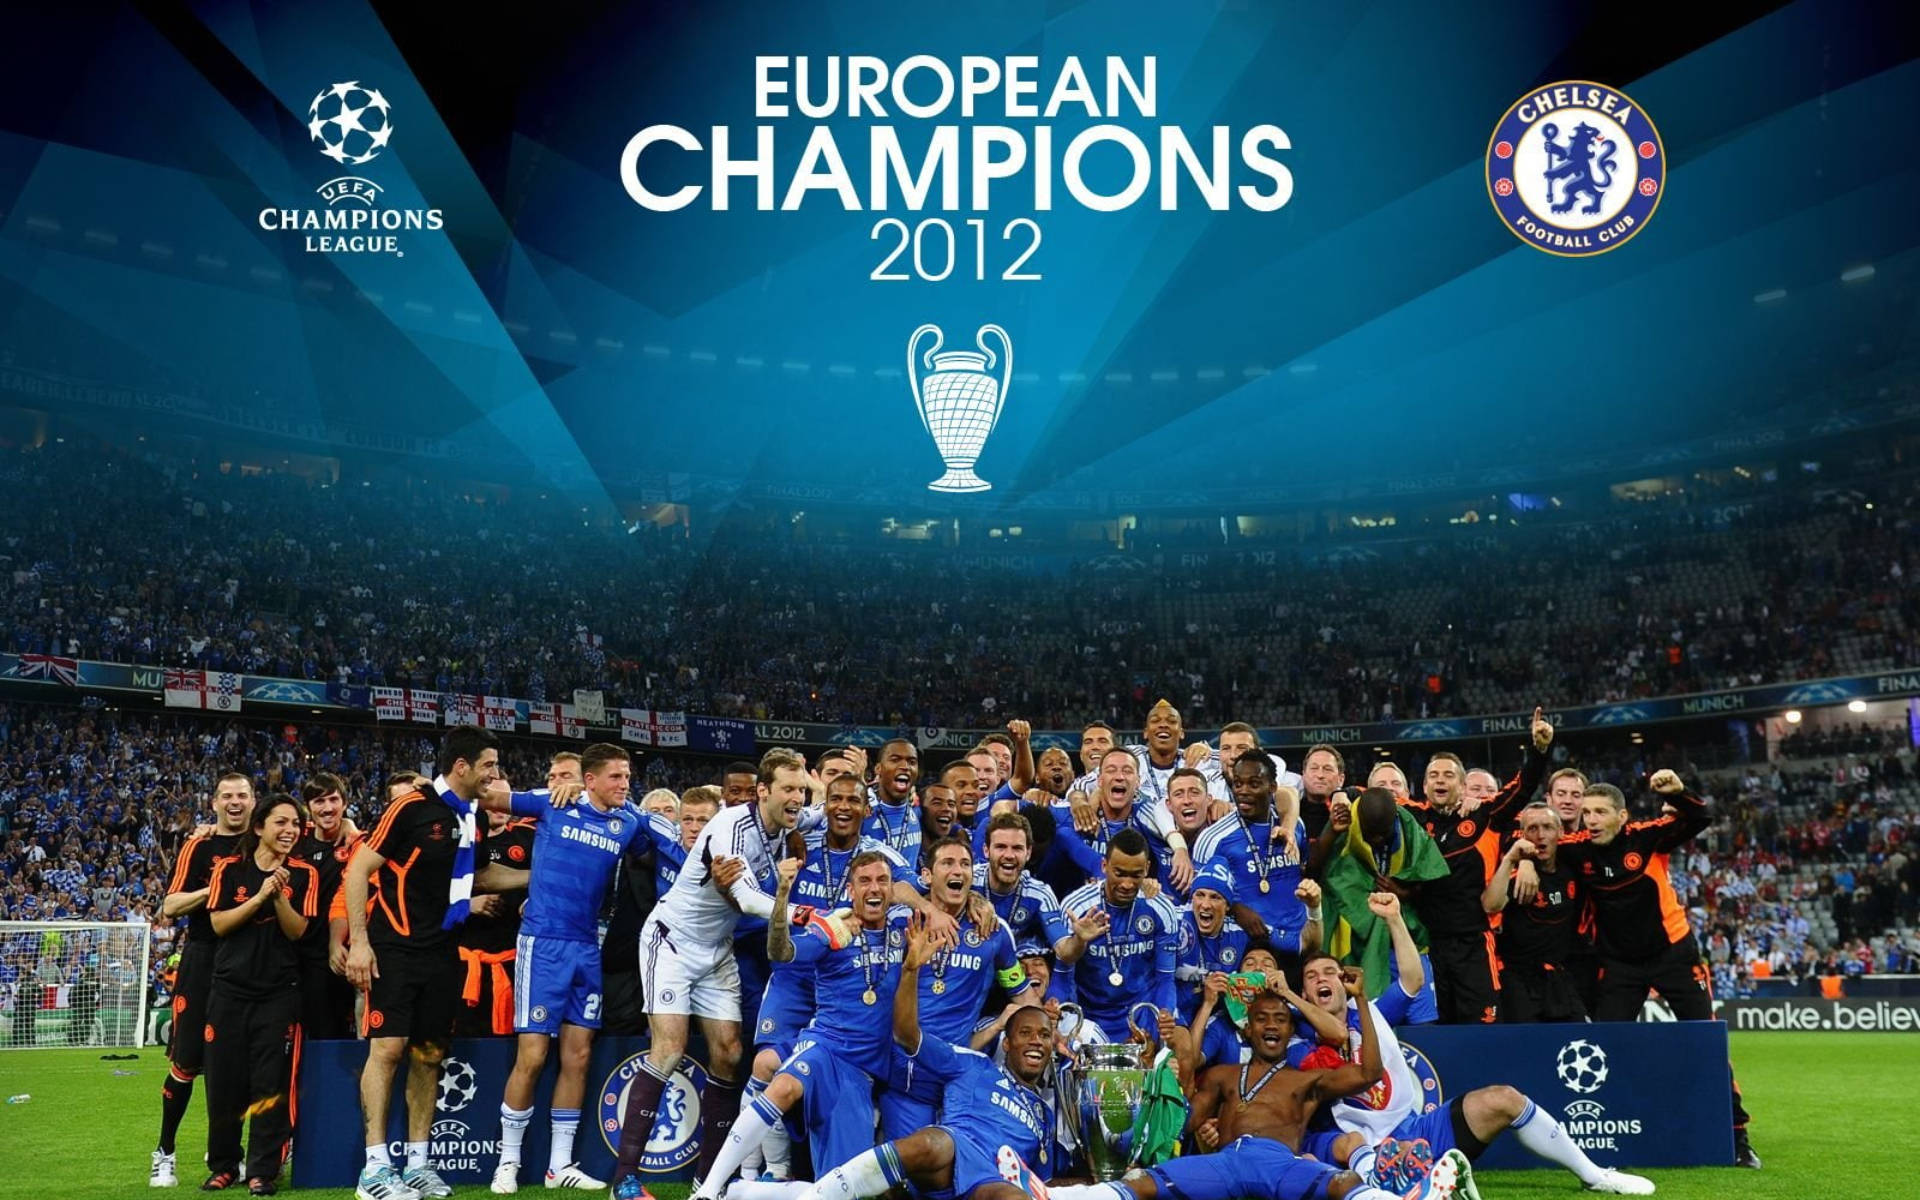 Chelsea Championship 2012 Background